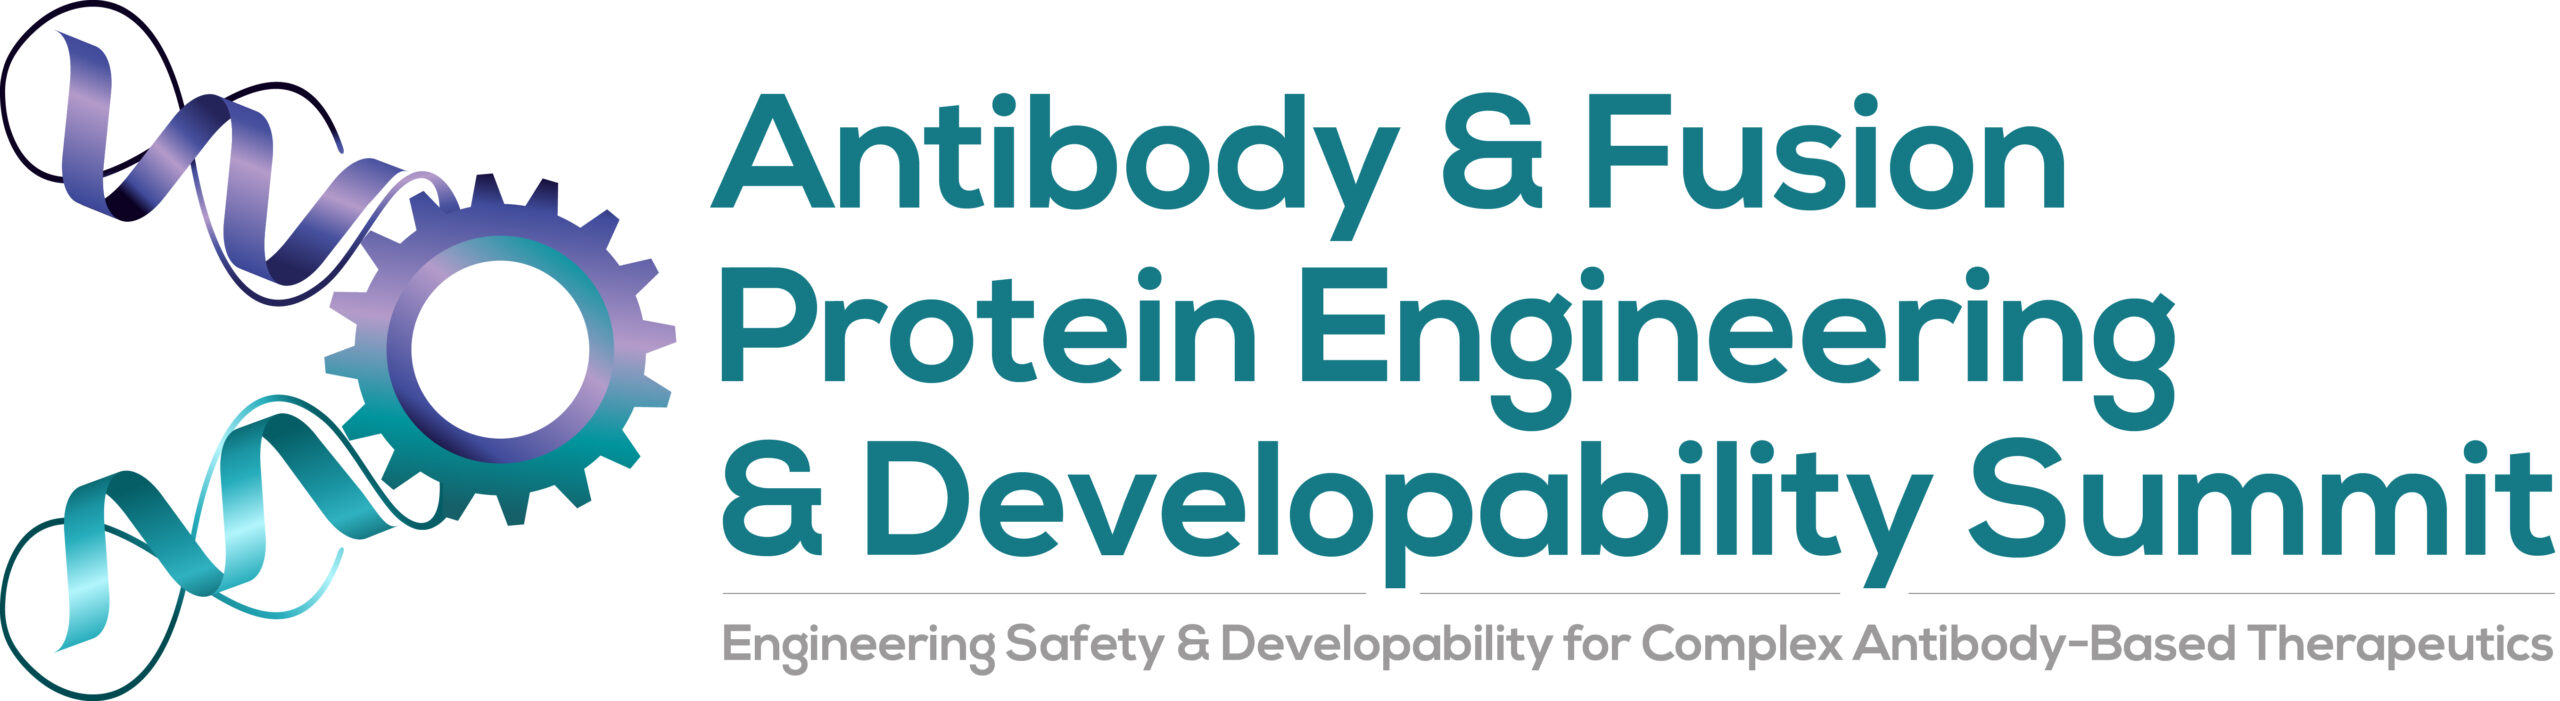 HW240226 48246 Antibody & Fusion Protein Engineering & Developability logo TAG (1)